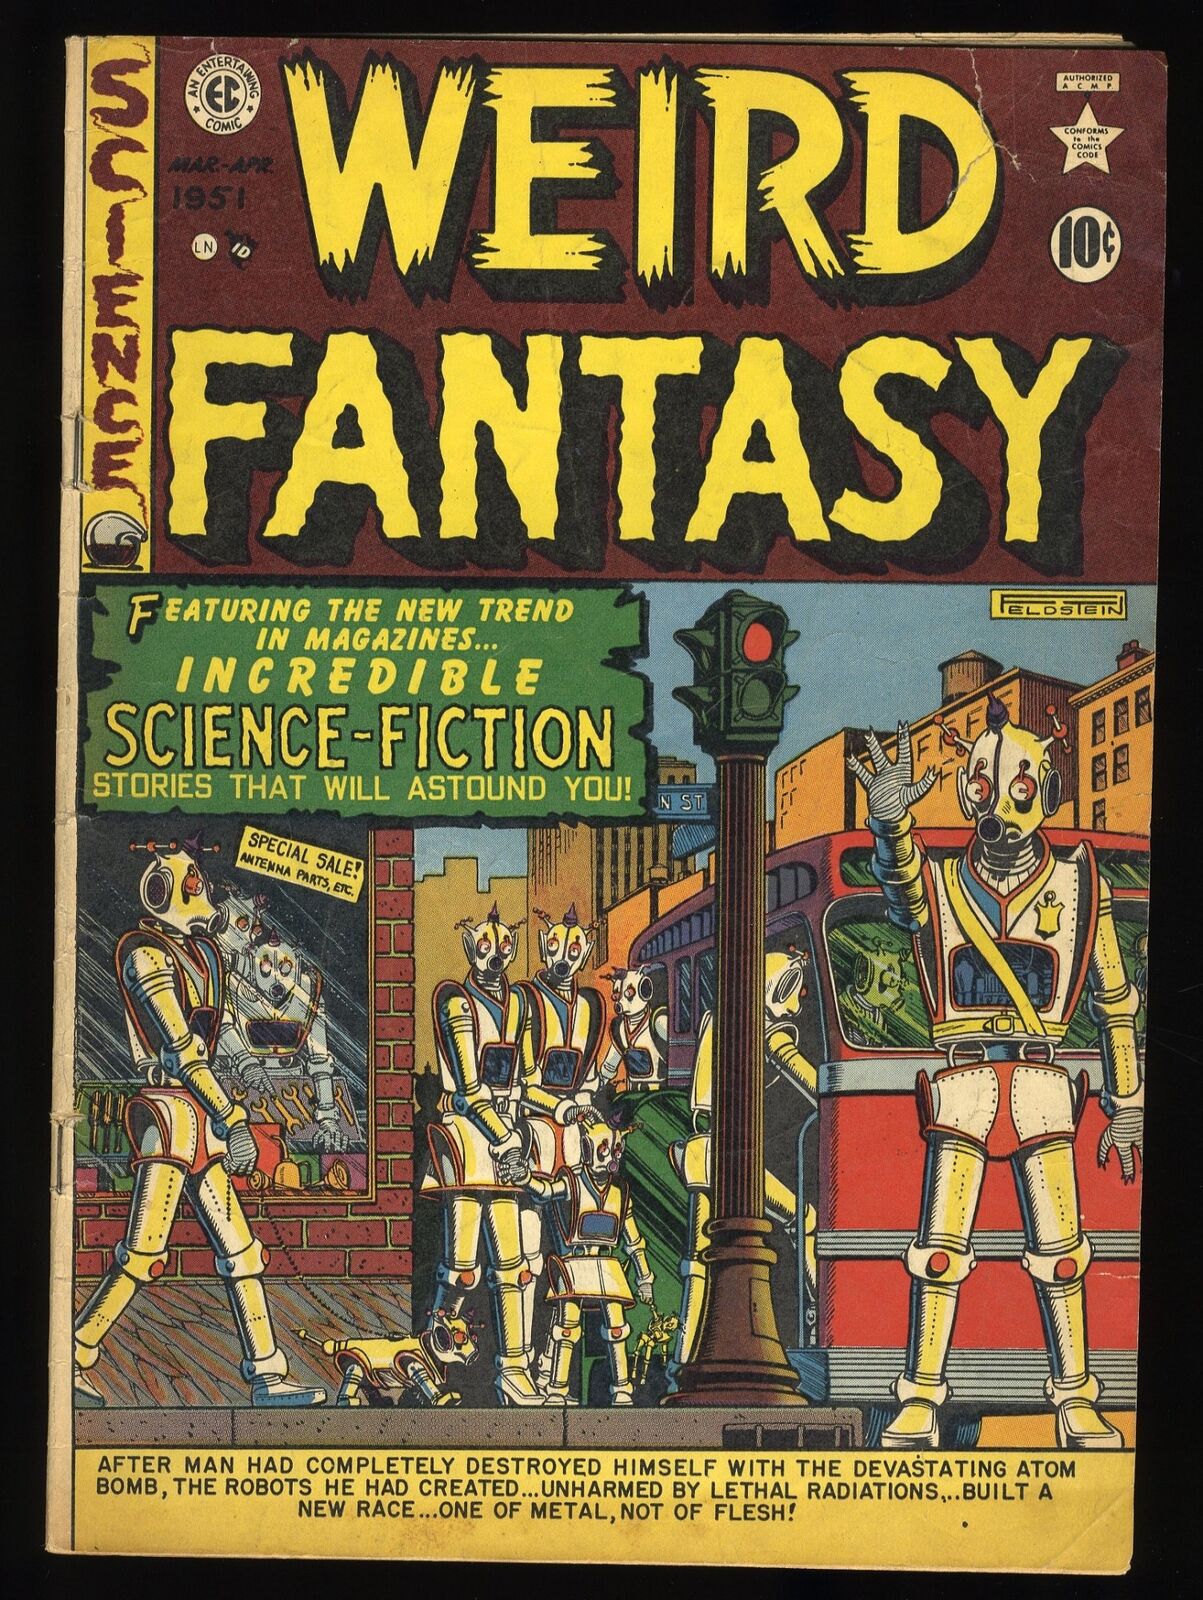 Weird Fantasy (1950) #6 VG+ 4.5 Robot Cover Art by Al Feldstein EC 1951